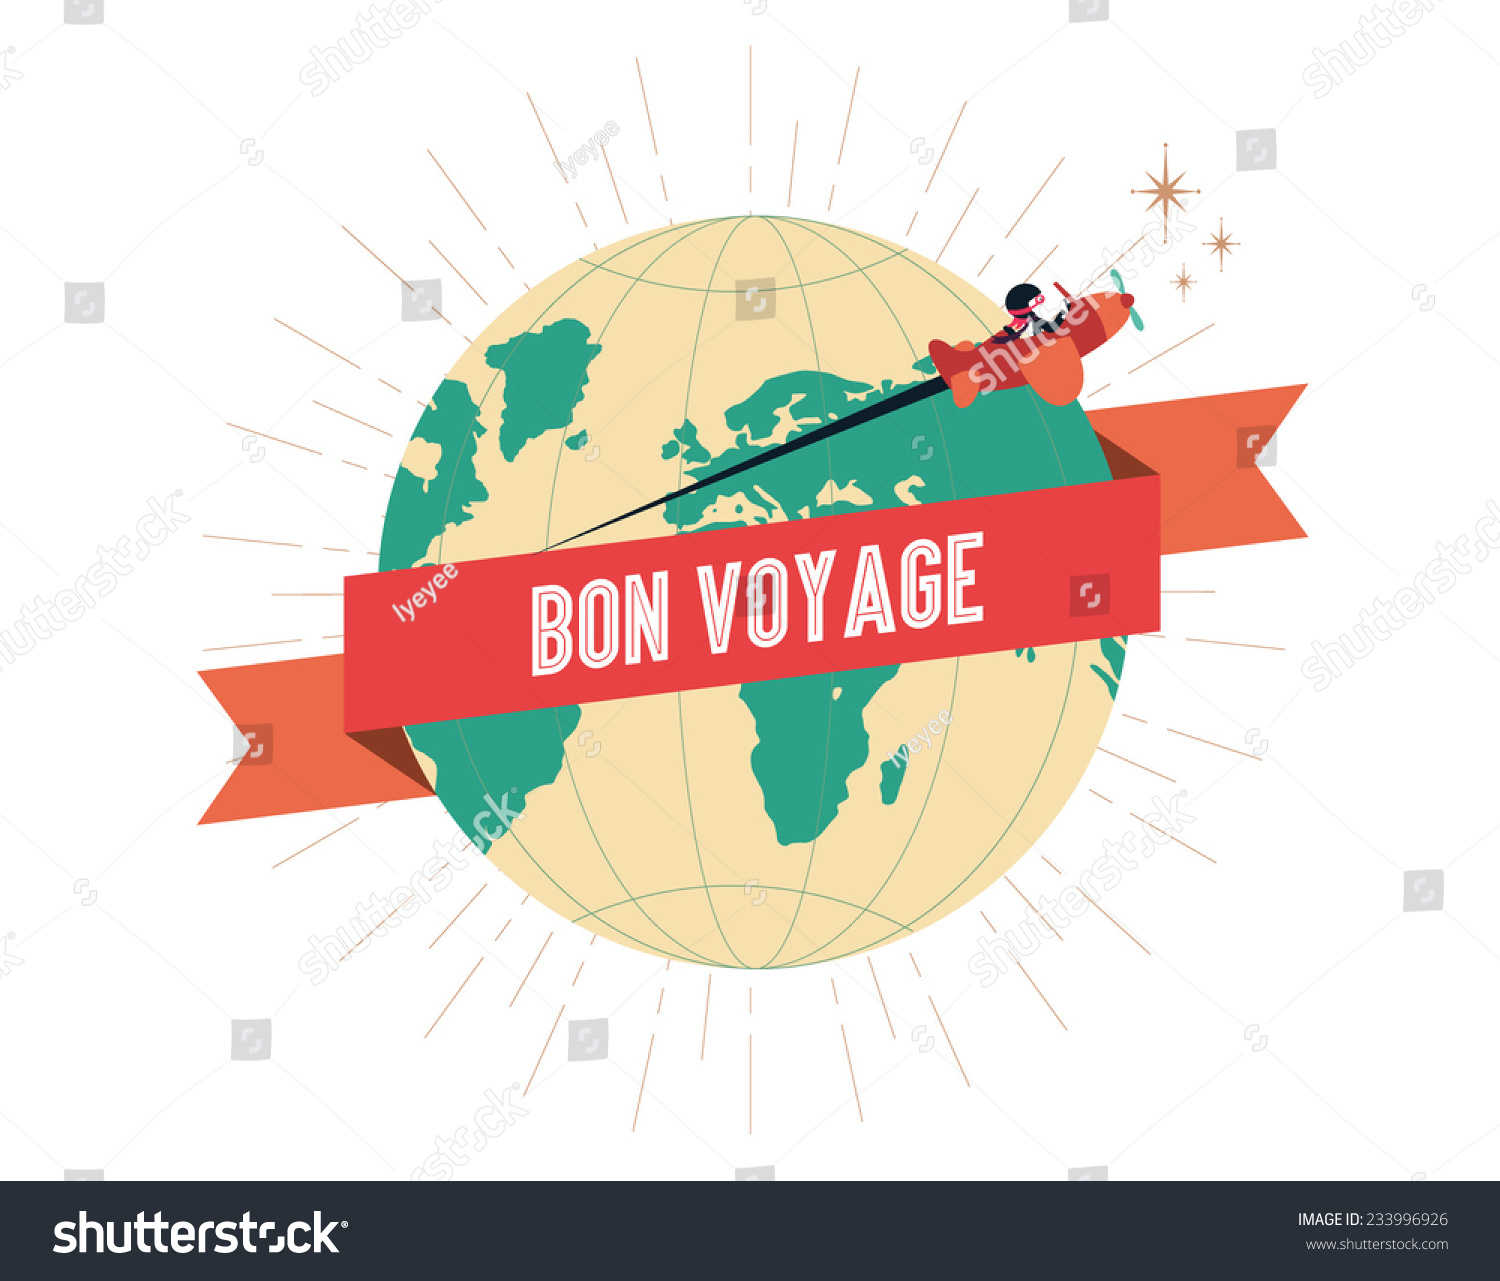 Bon Voyage Template Vectorillustration Stock Vector 233996926